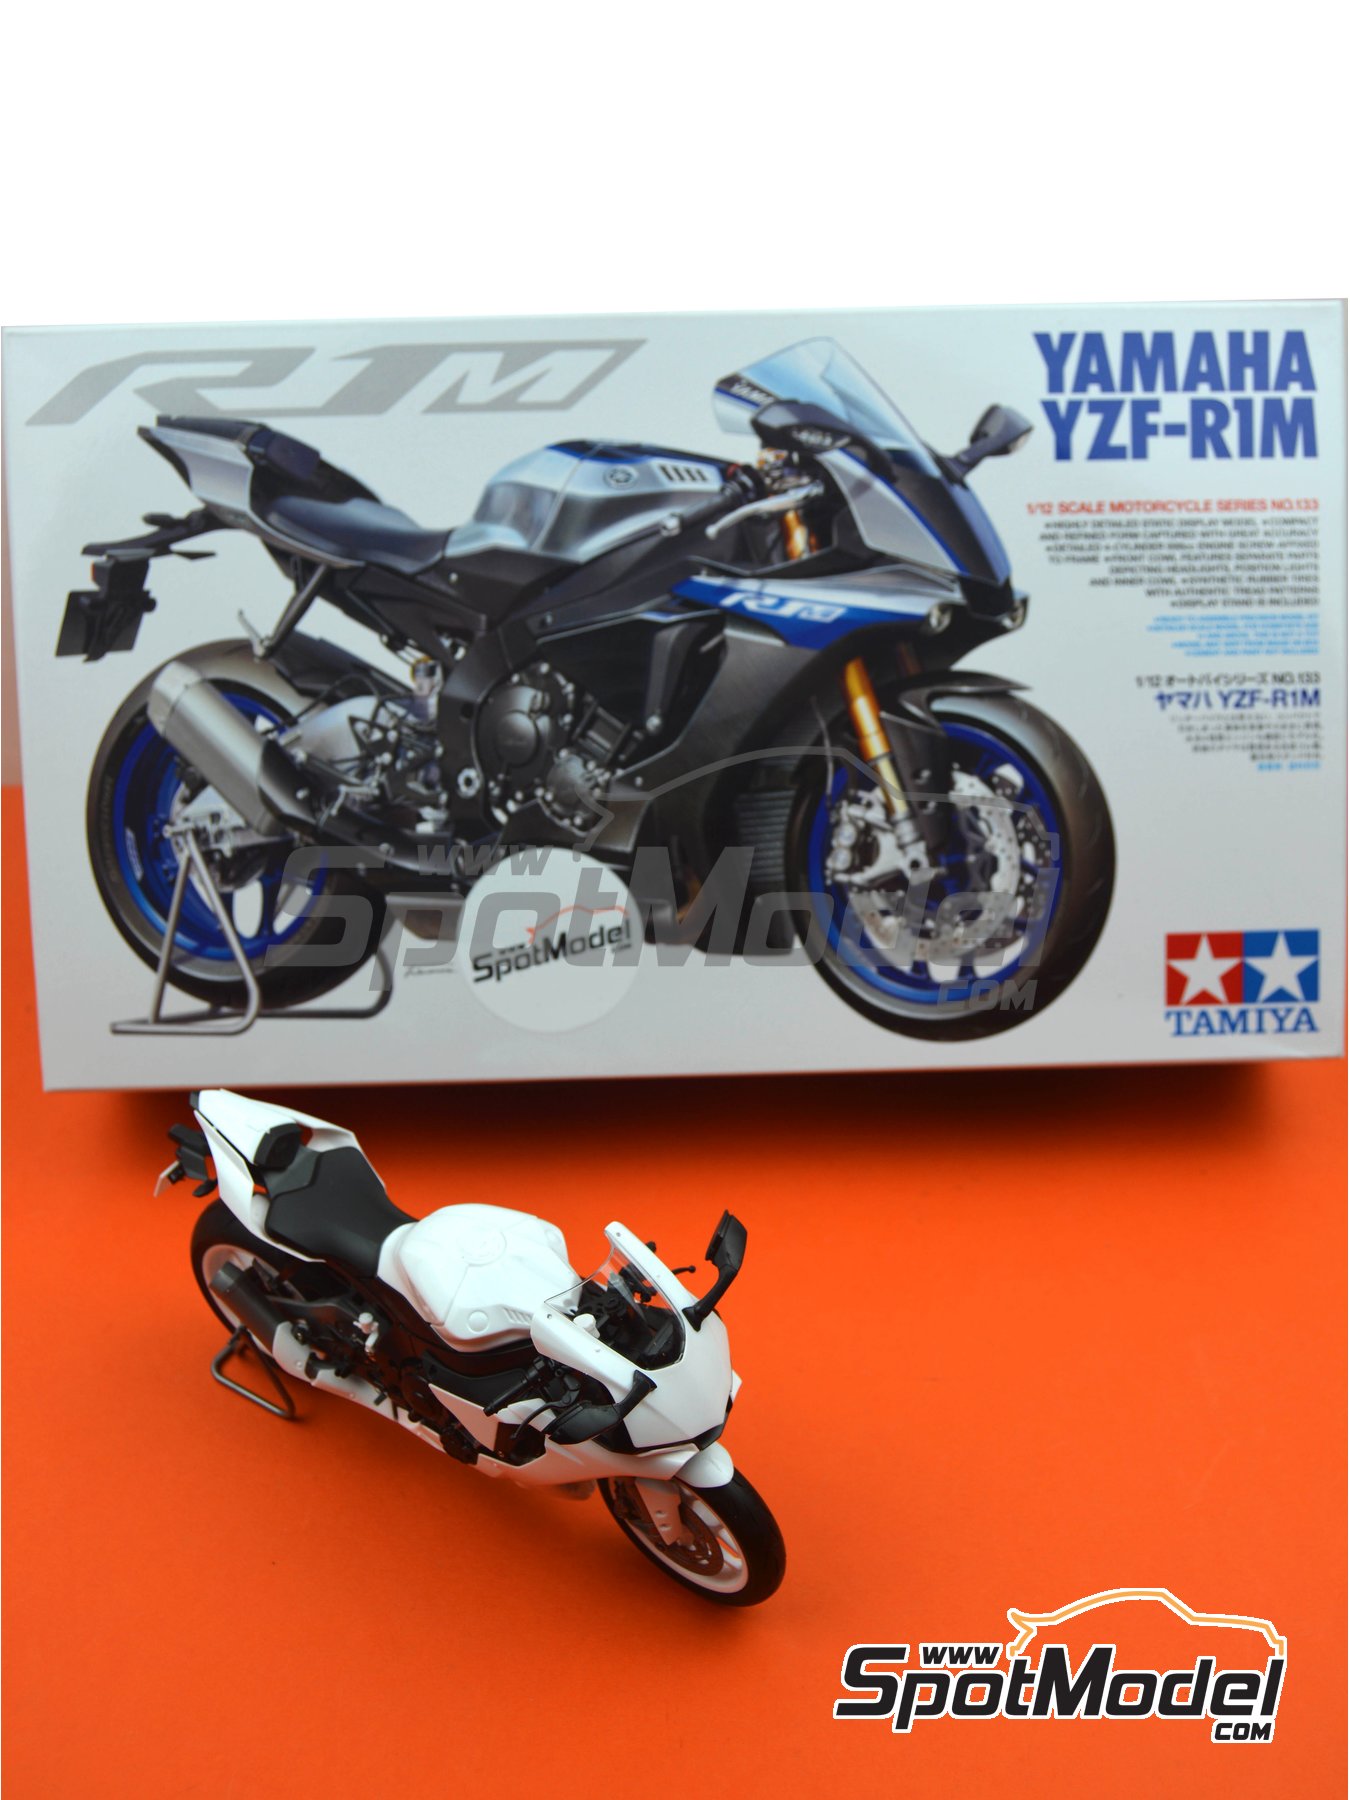 Tamiya 14133 1/12 Yamaha Yzf-r1m Motorcycle Plastic Model Kit Tam14133 for sale online 